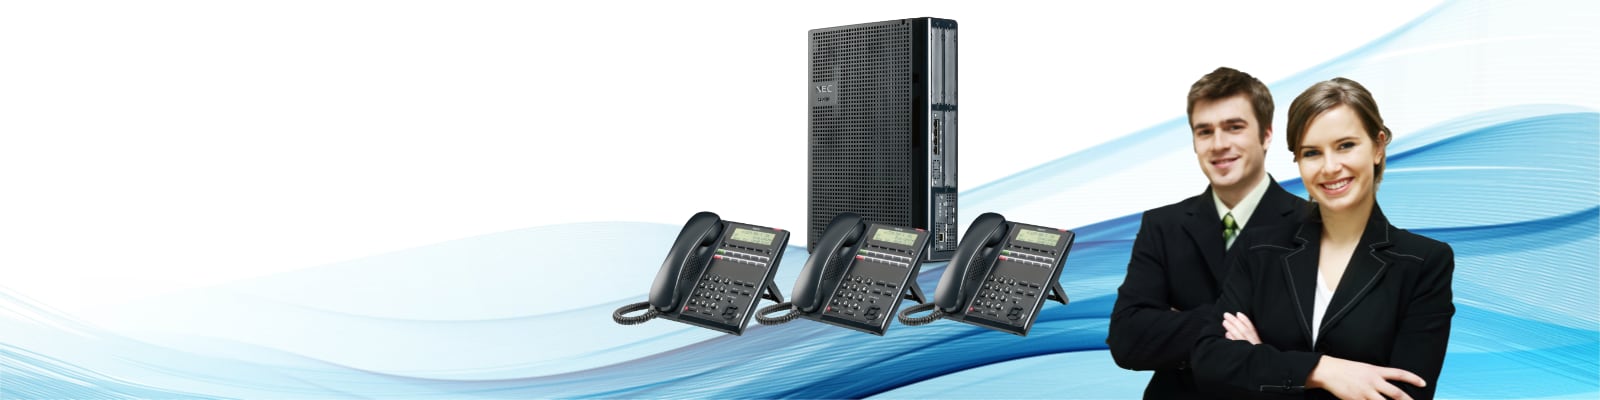 NEC SL2100 Phone System promo